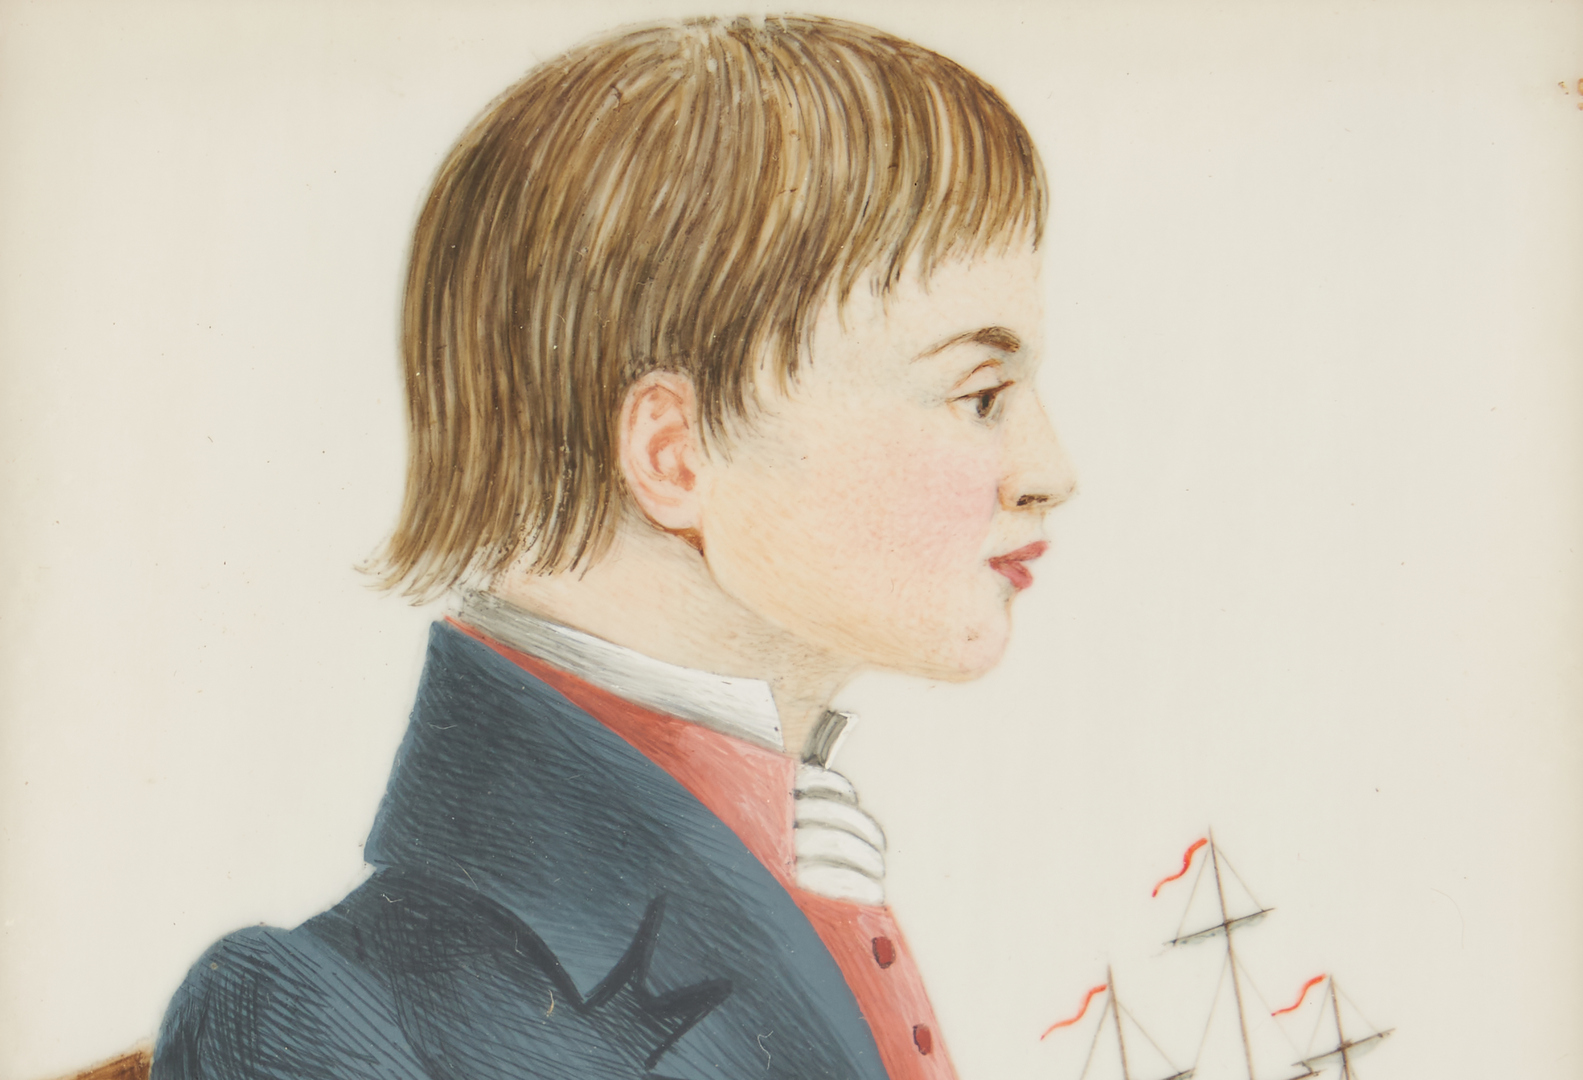 Lot 151: Portrait Miniature, Young John Watson w/ Toy Ship